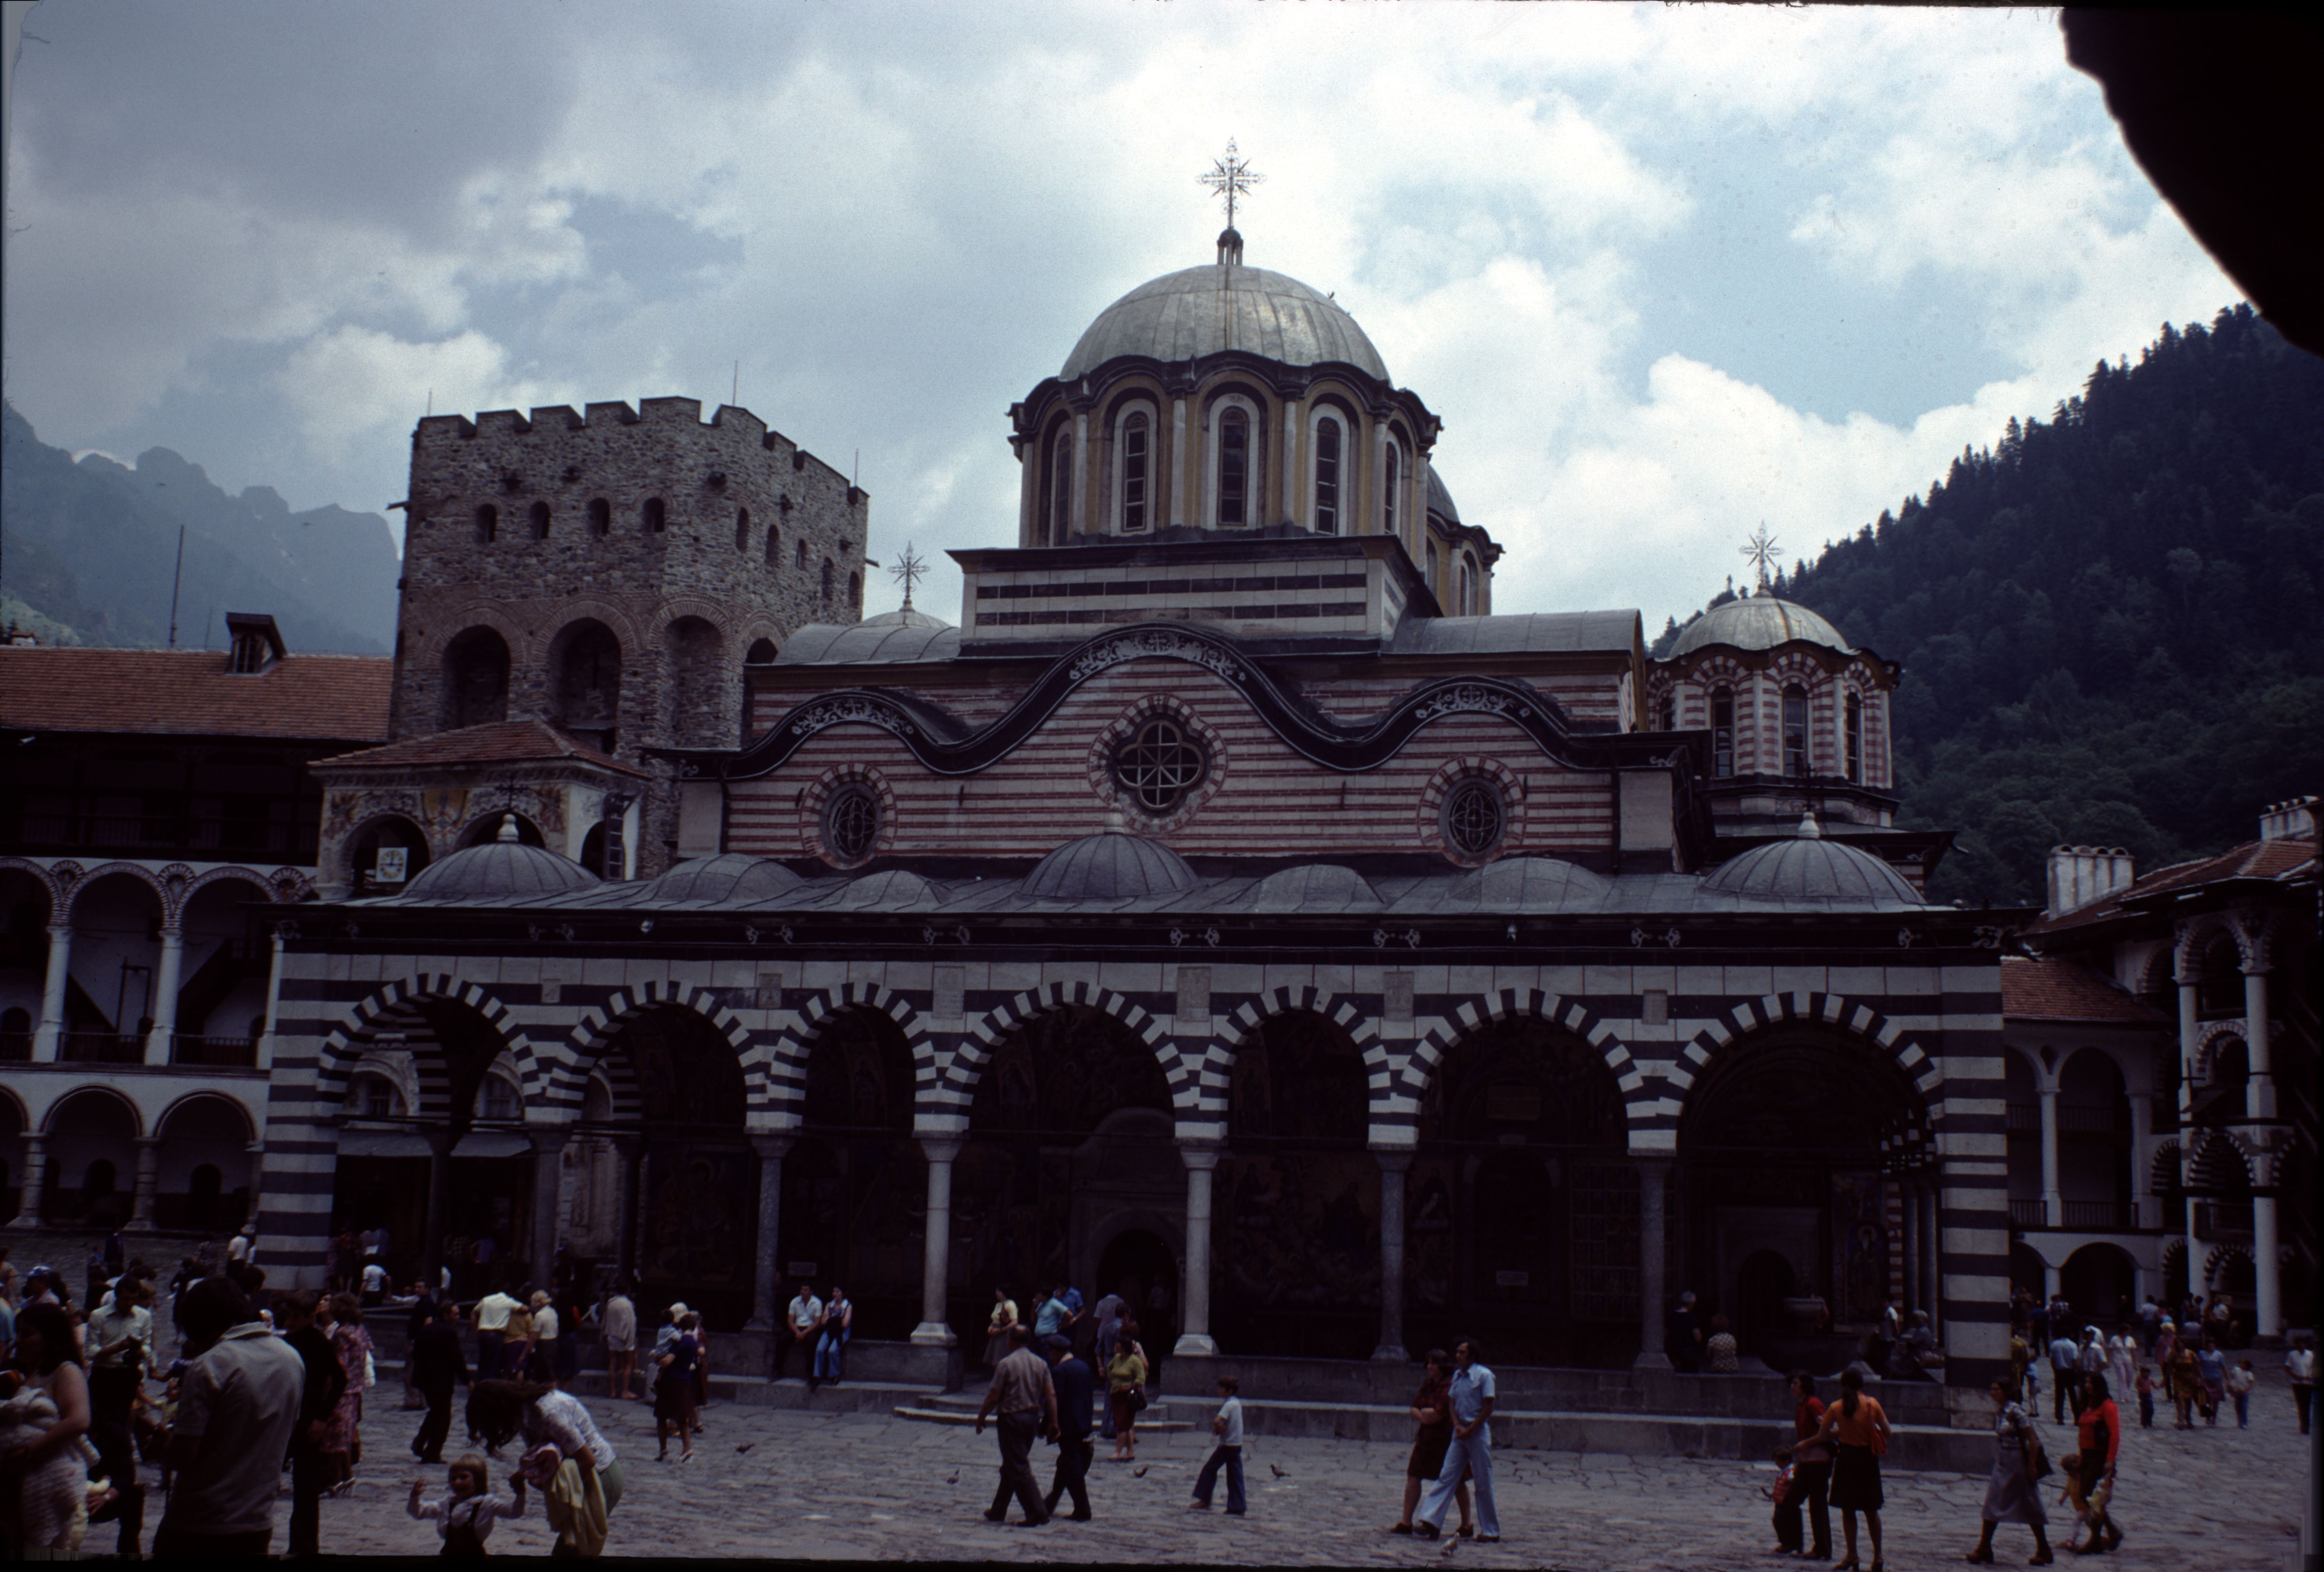 The monastery church of the Rila Monastery, Republic of Bulgaria, 1977